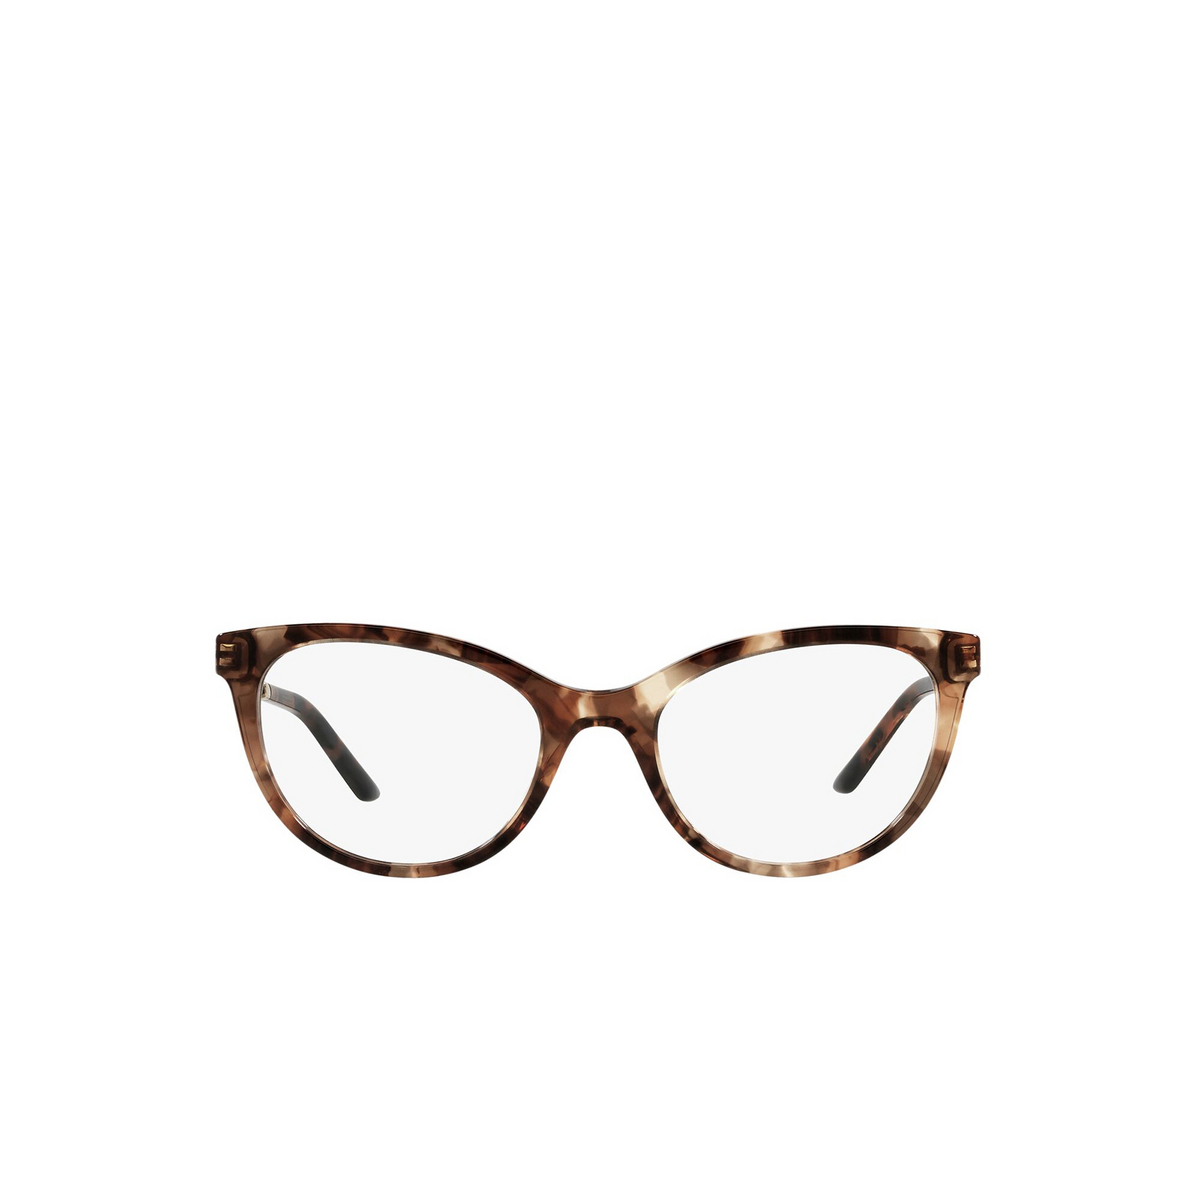 Prada® Oval Eyeglasses: PR 17WV color Caramel Tortoise 07R1O1 - front view.